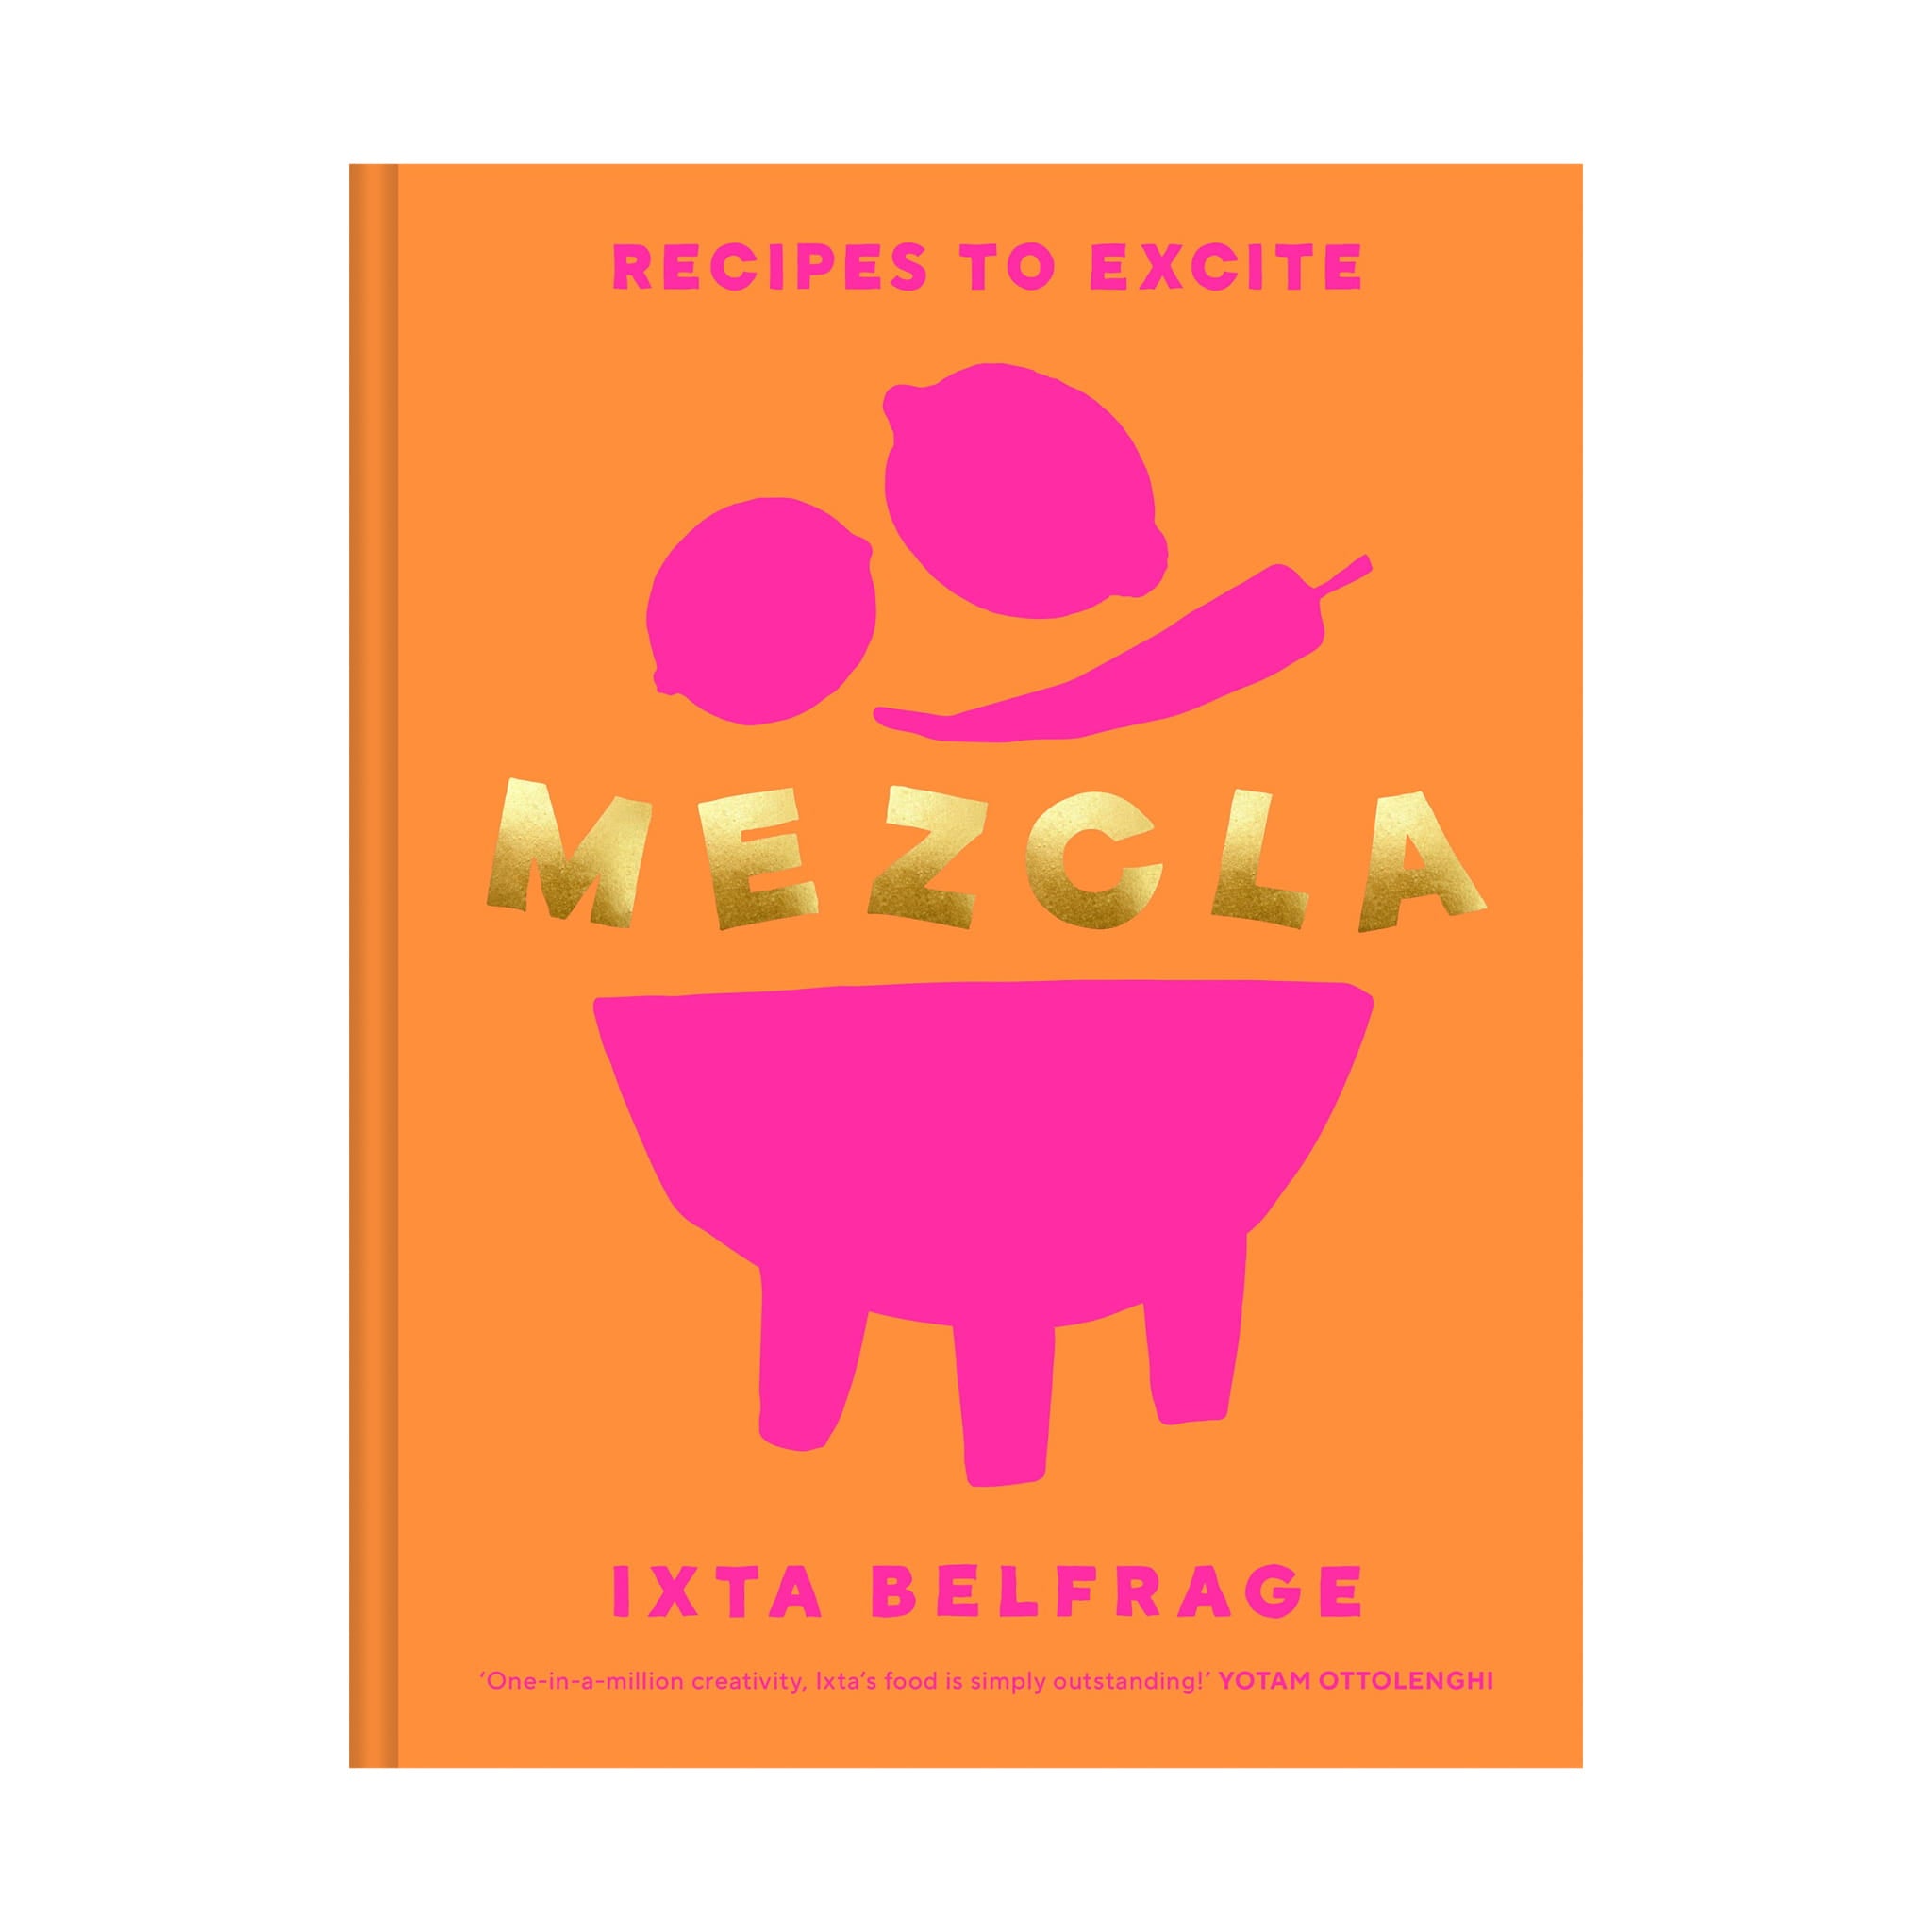 Mezcla by Ixta Belfrage